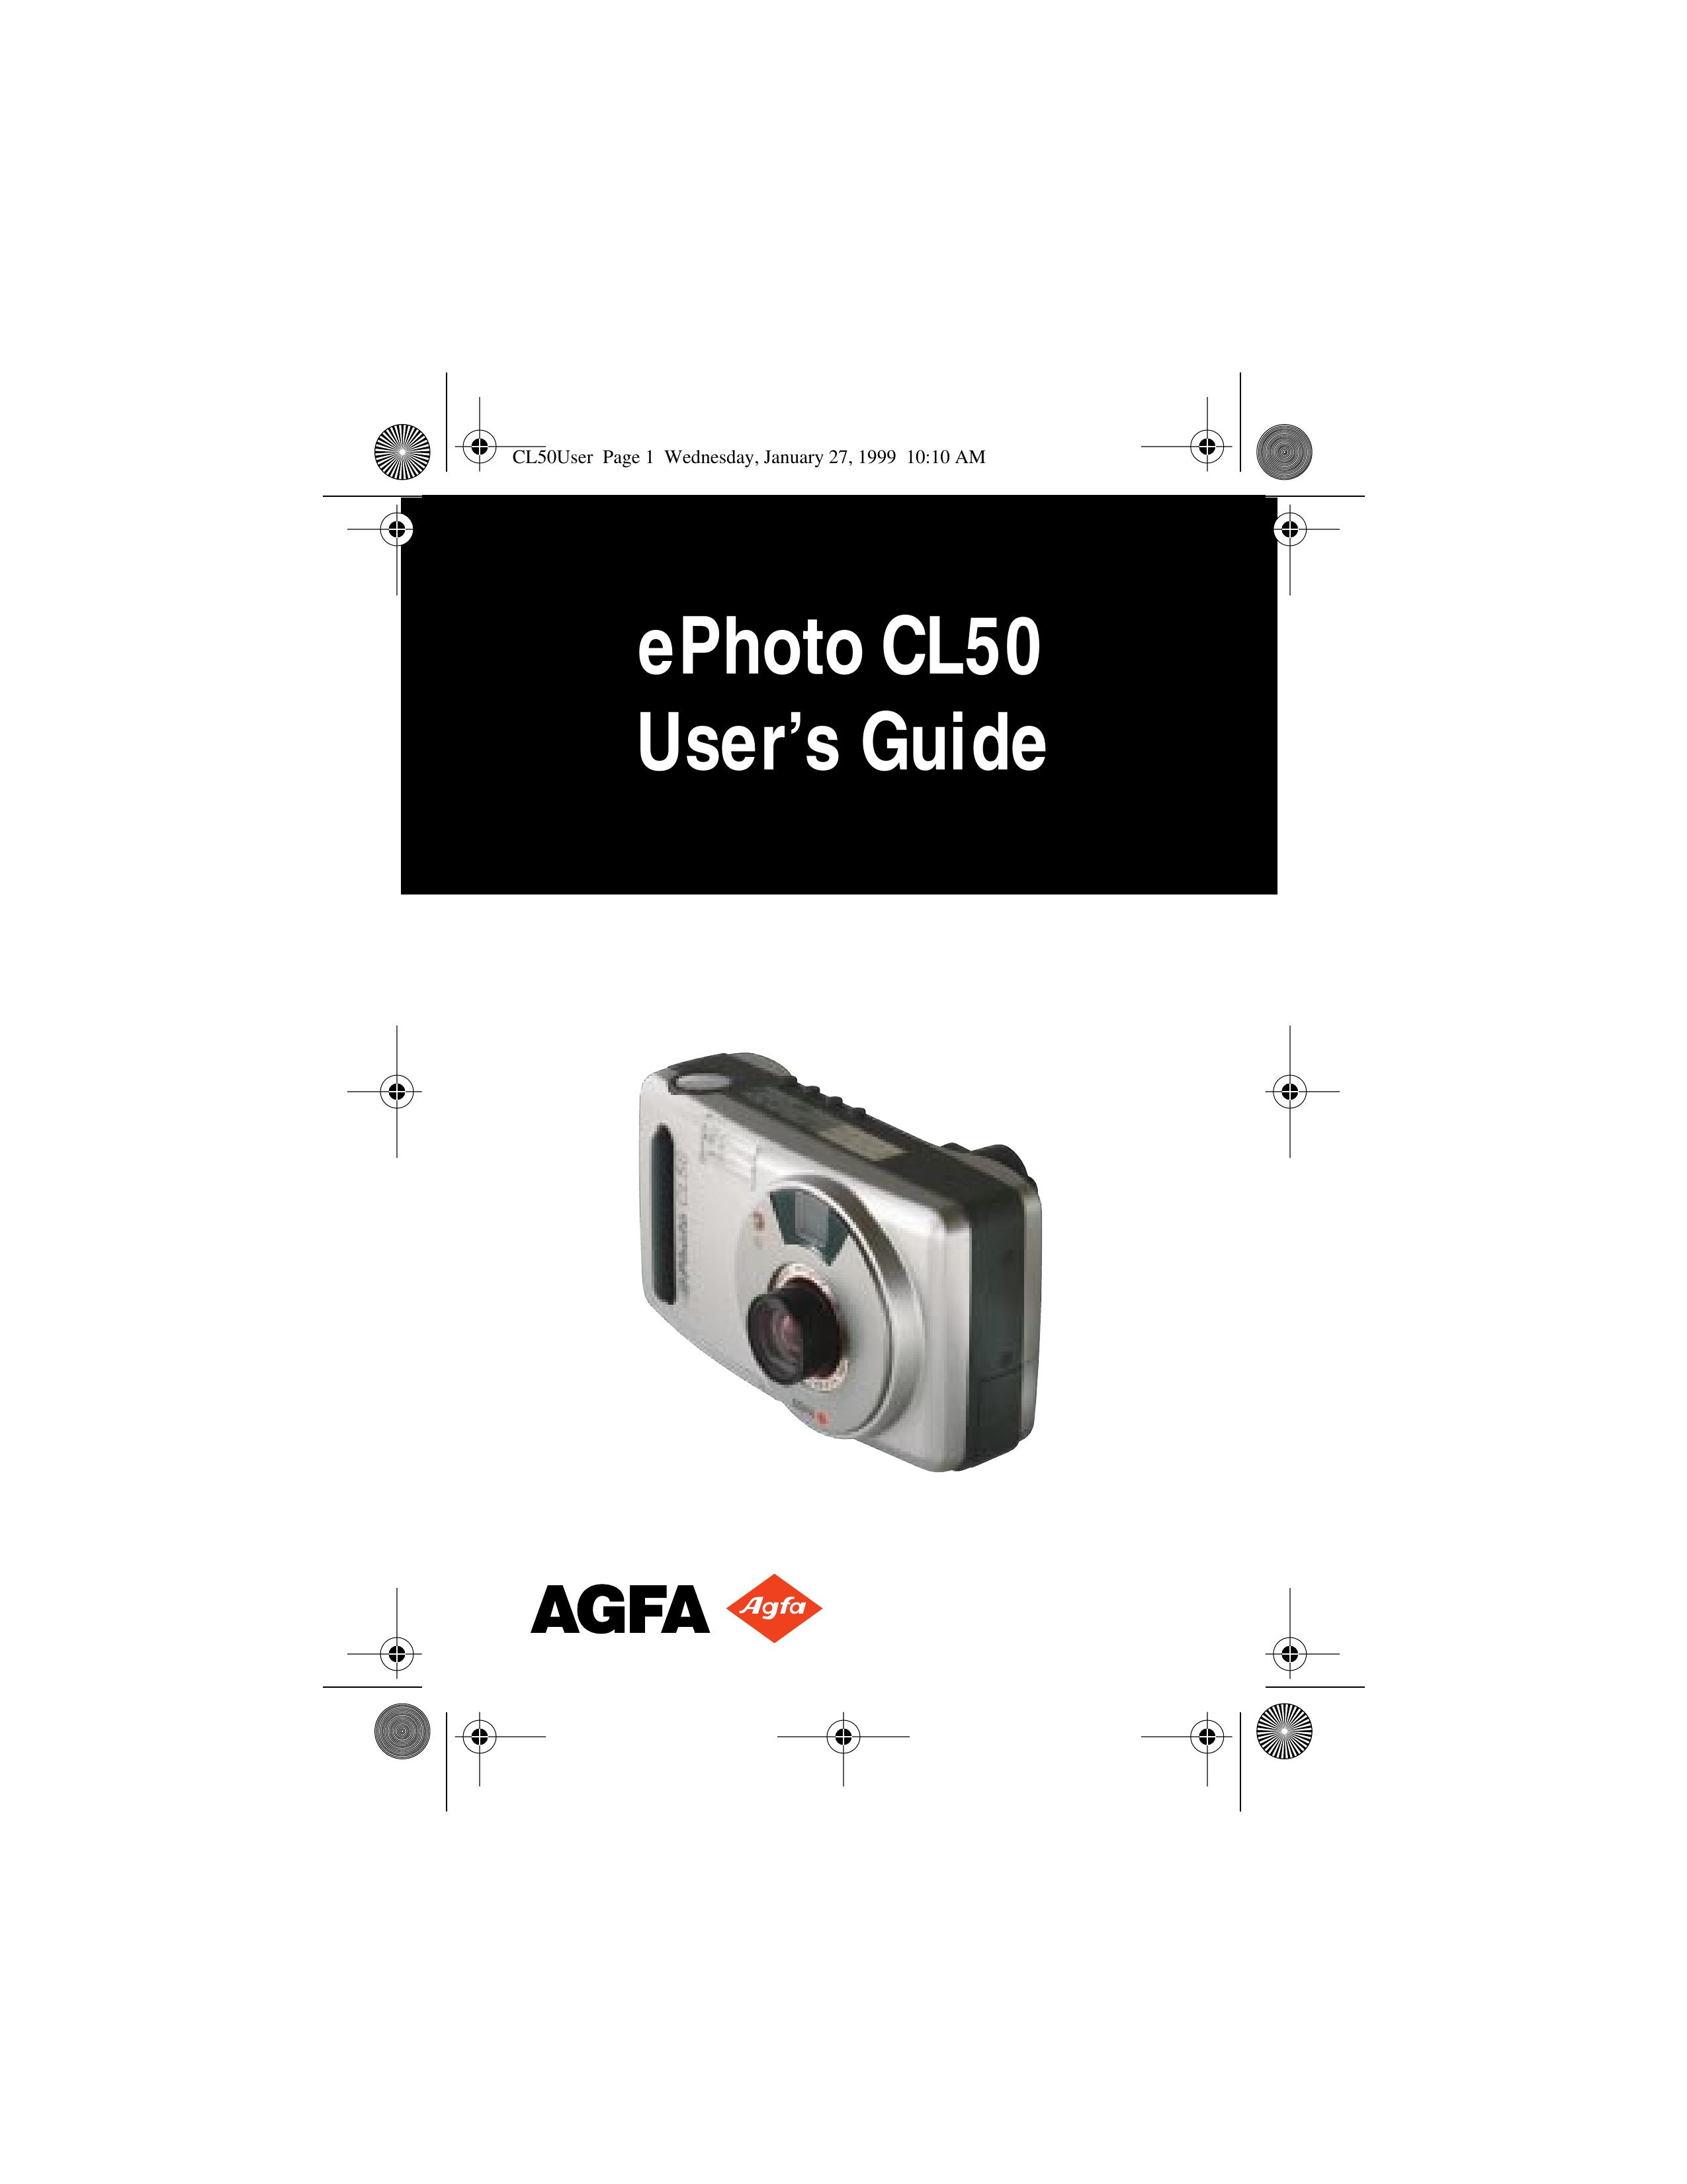 AGFA CL50 Digital Camera User Manual (Page 1)